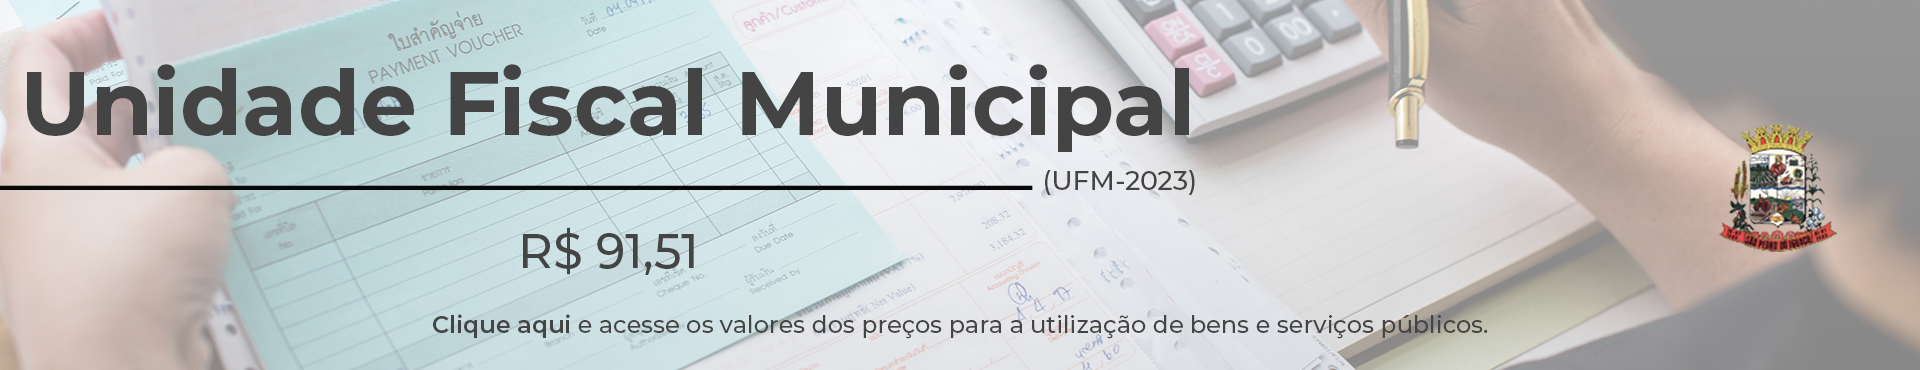 UNIDADE FISCAL MUNICIPAL - UFM 2023